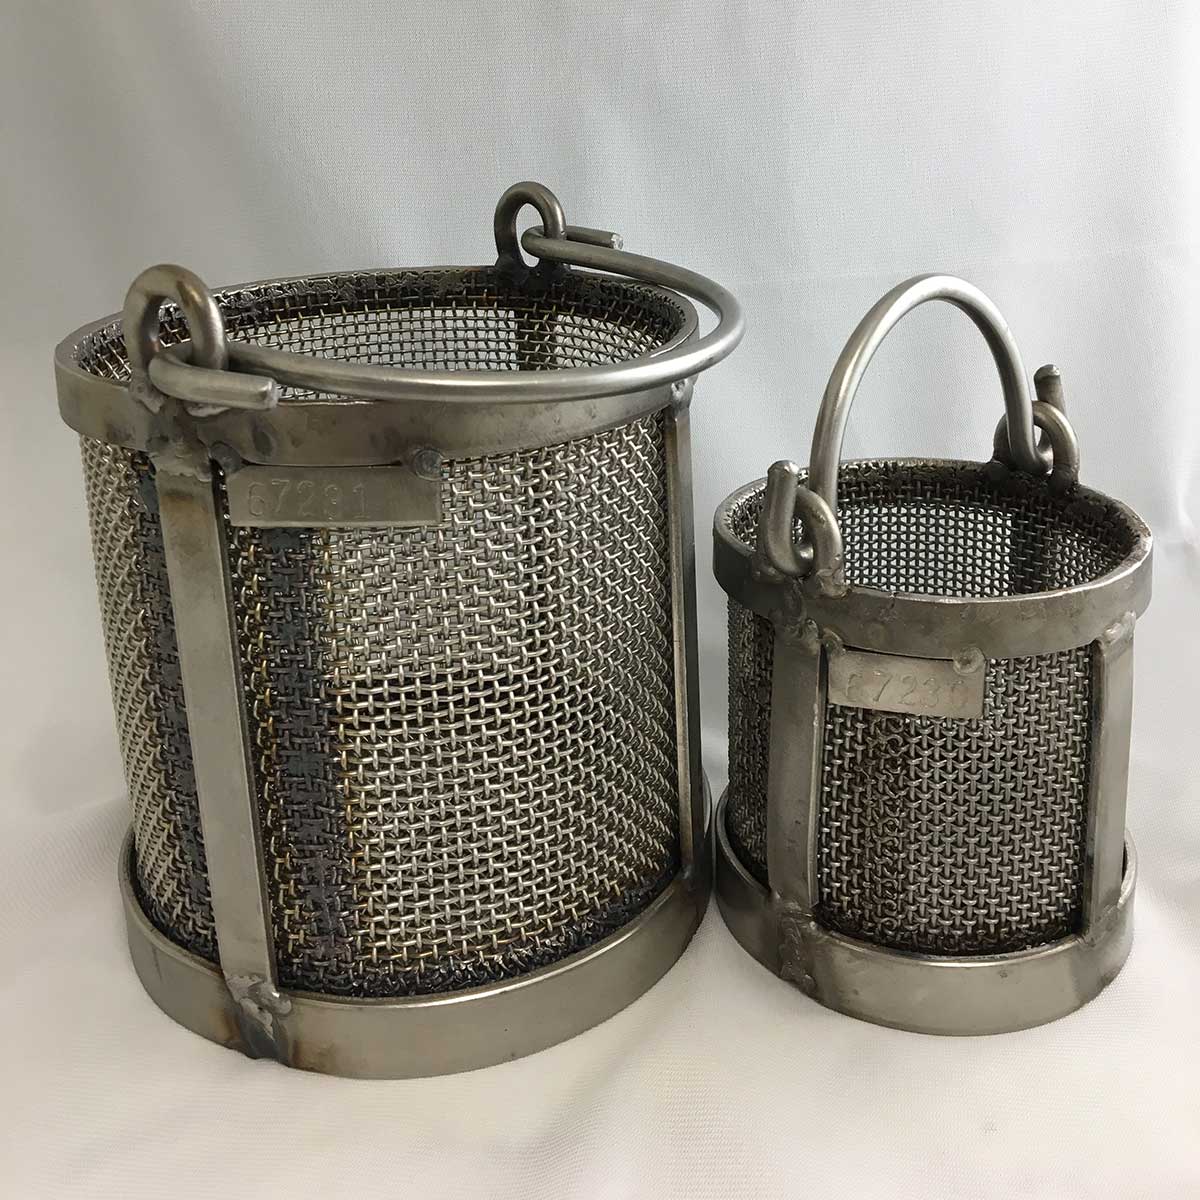 https://jsamc2.com/wp-content/uploads/2020/06/Small-Stainless-Steel-Dipping-Baskets.jpg